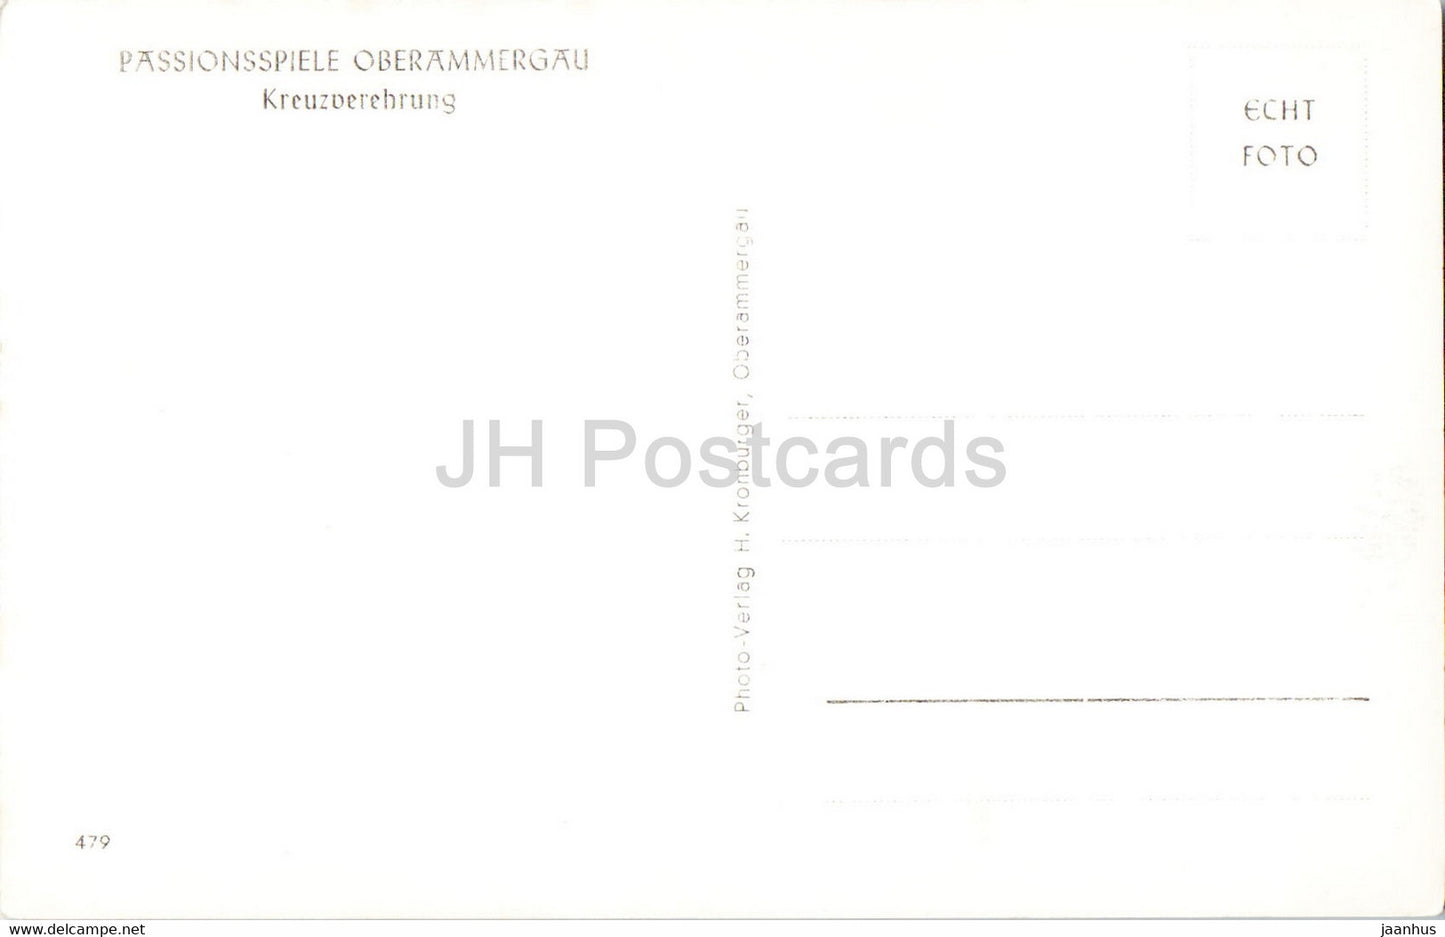 Passionsspiele Oberammergau - Kreuzverehrung - théâtre - carte postale ancienne - Allemagne - inutilisé